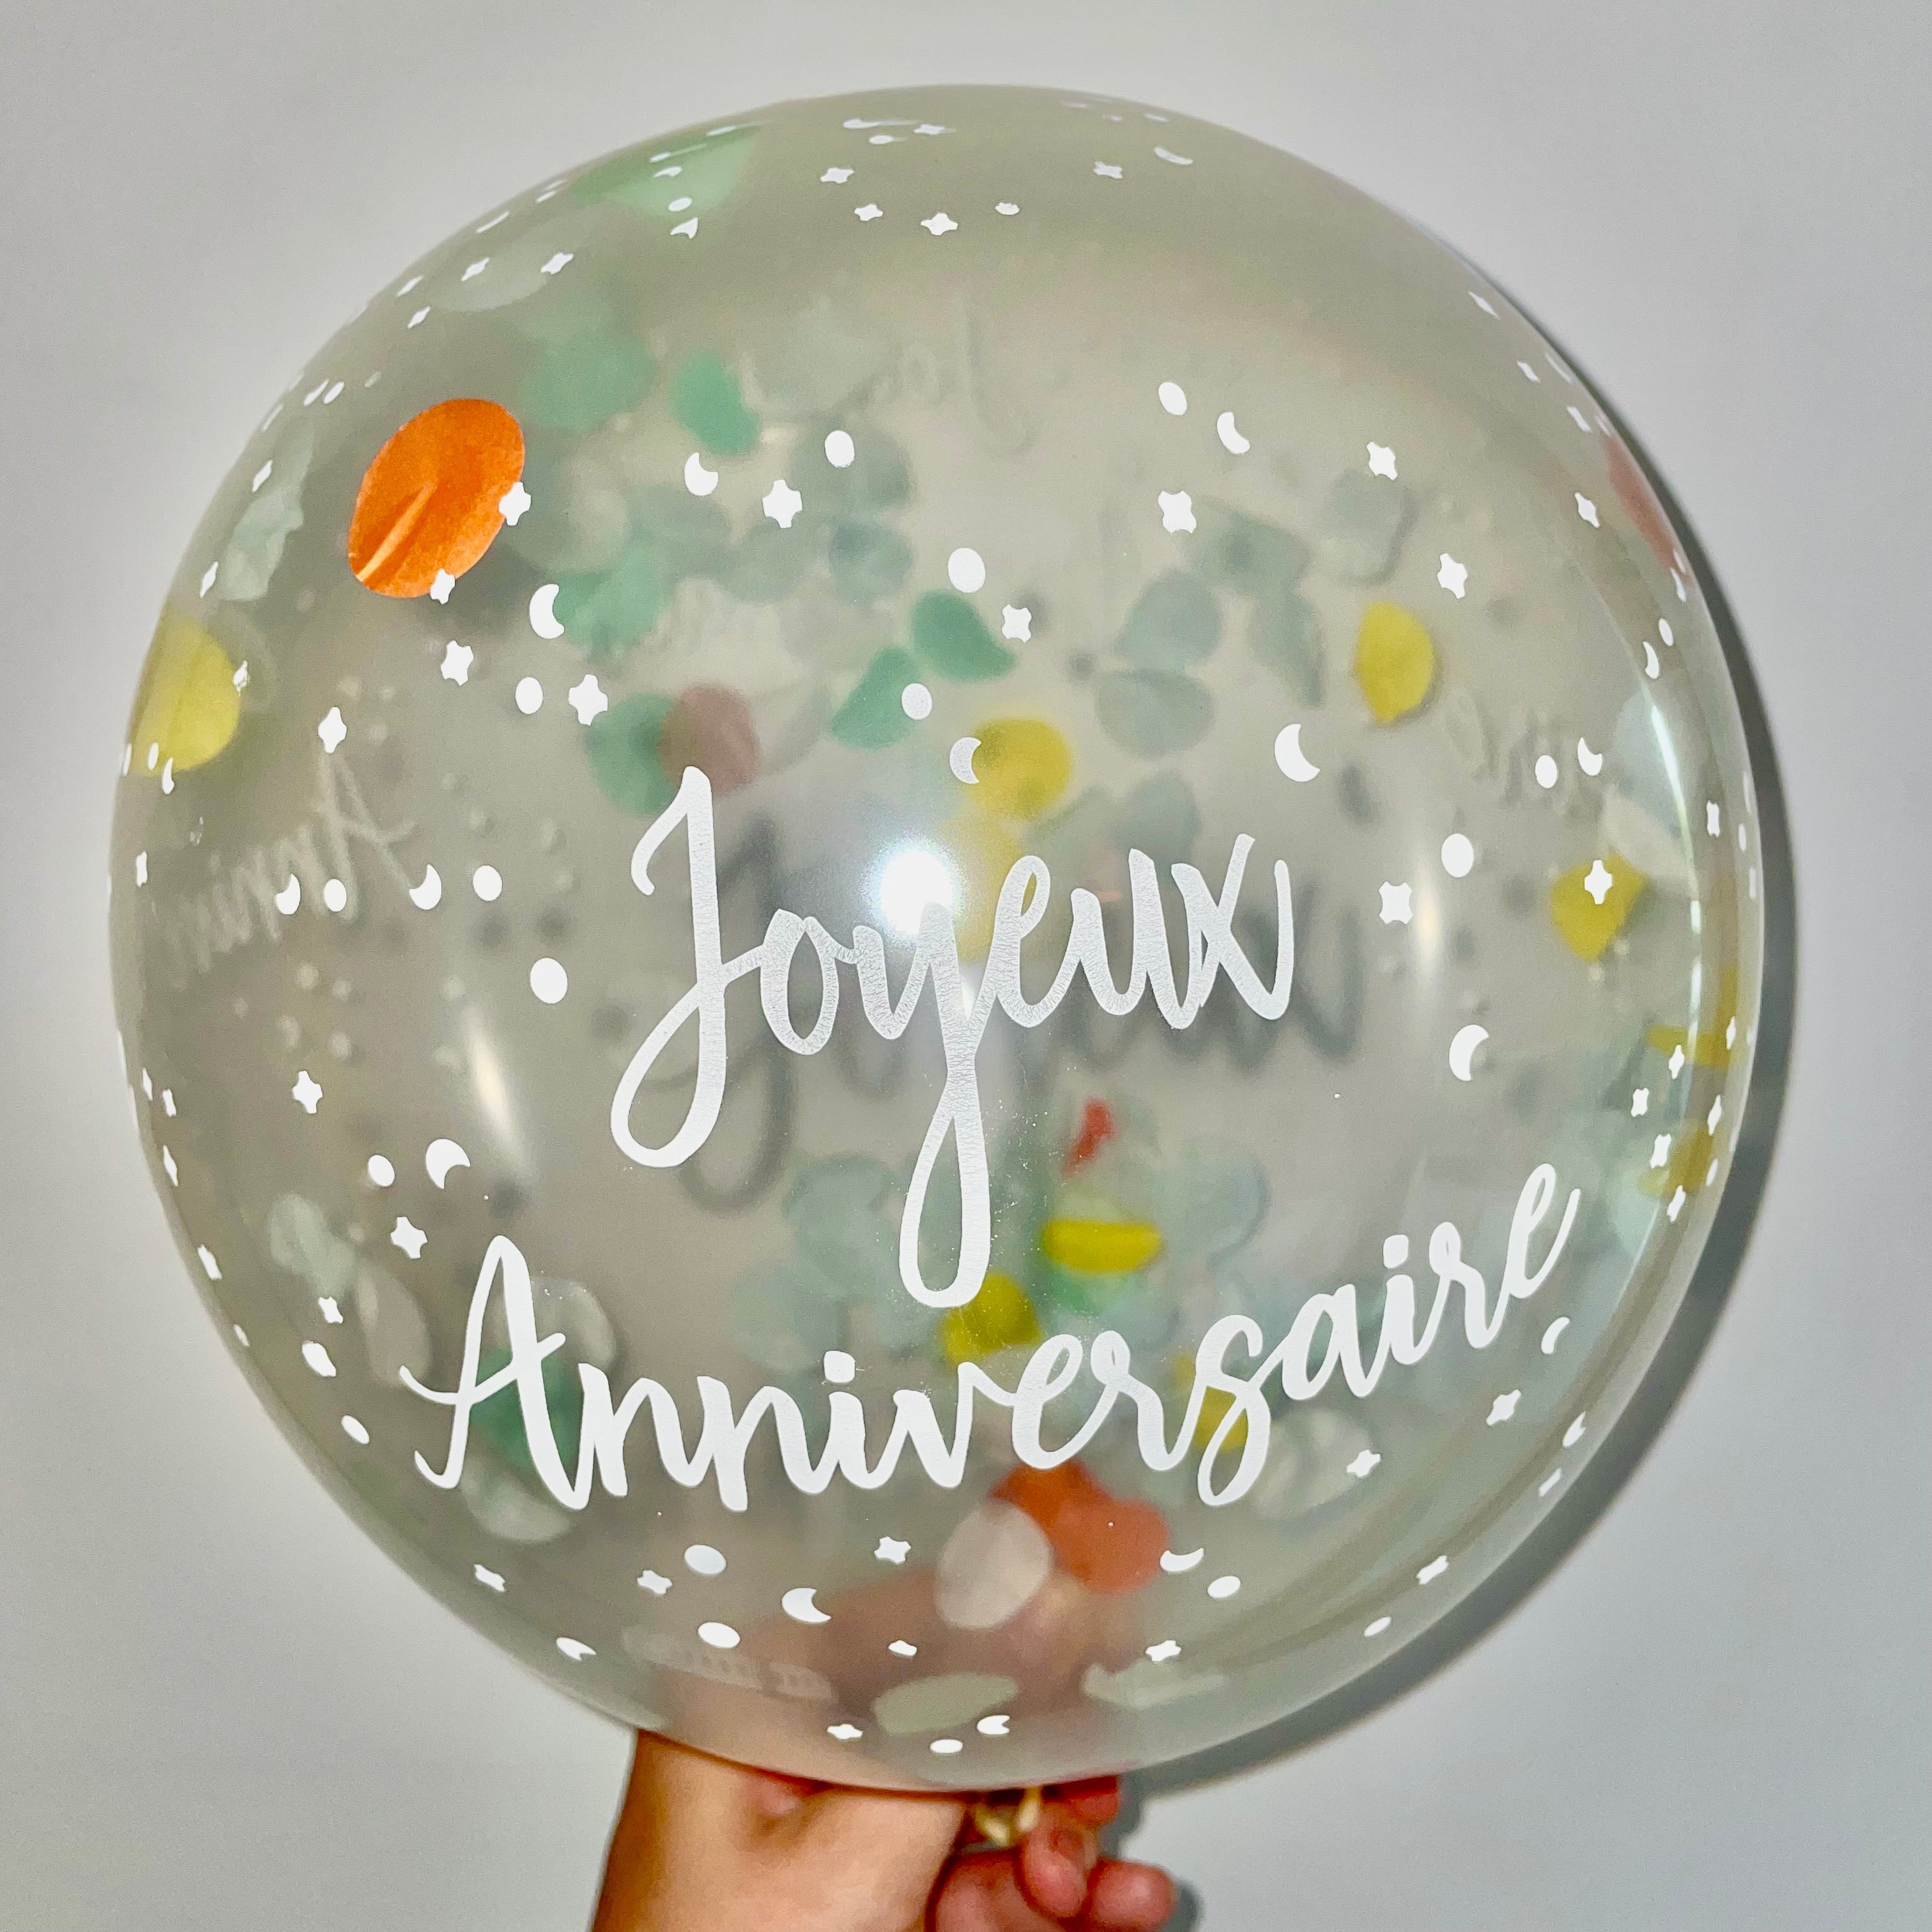 décoration ballon anniversaire ballons transparents  Birthday party  balloon, Balloon decorations party, Birthday party themes